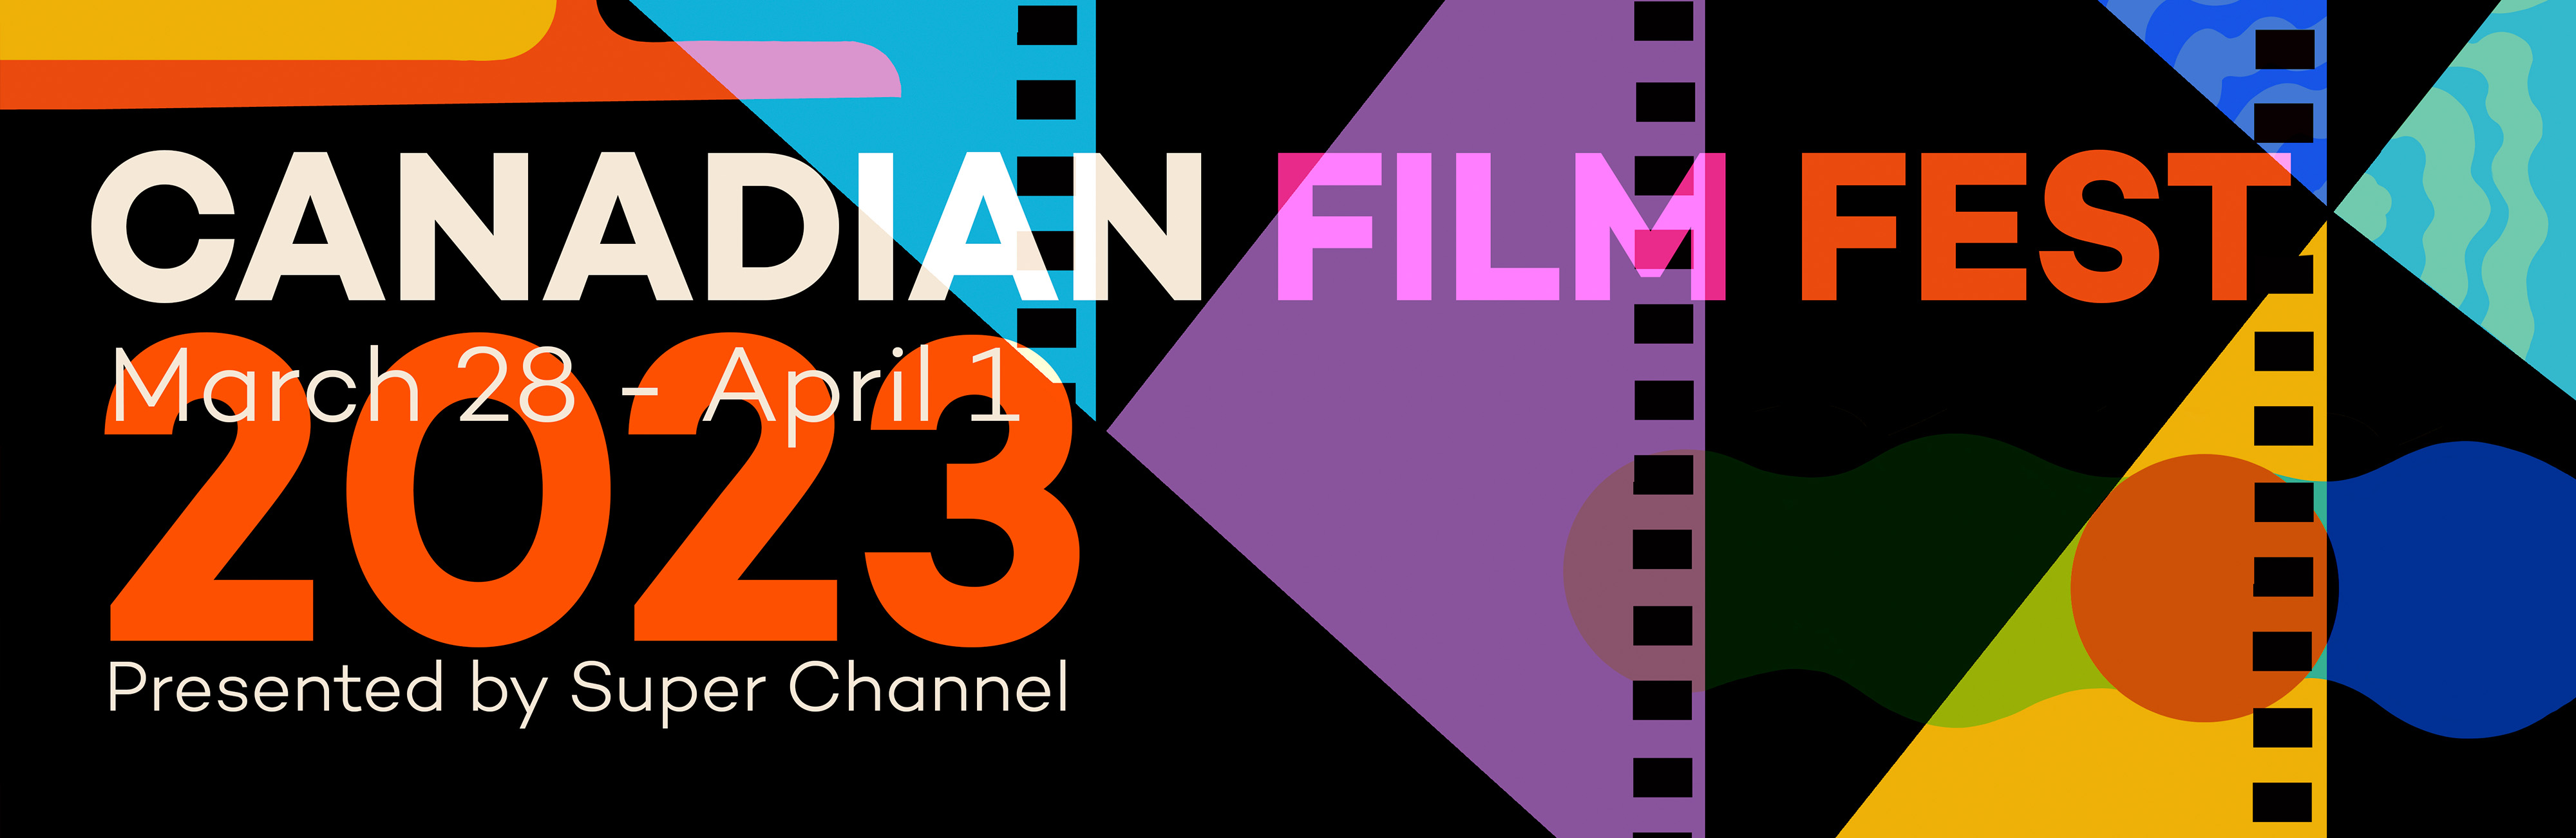 Super Channel Canadian Film Festival March 28th - April 1st